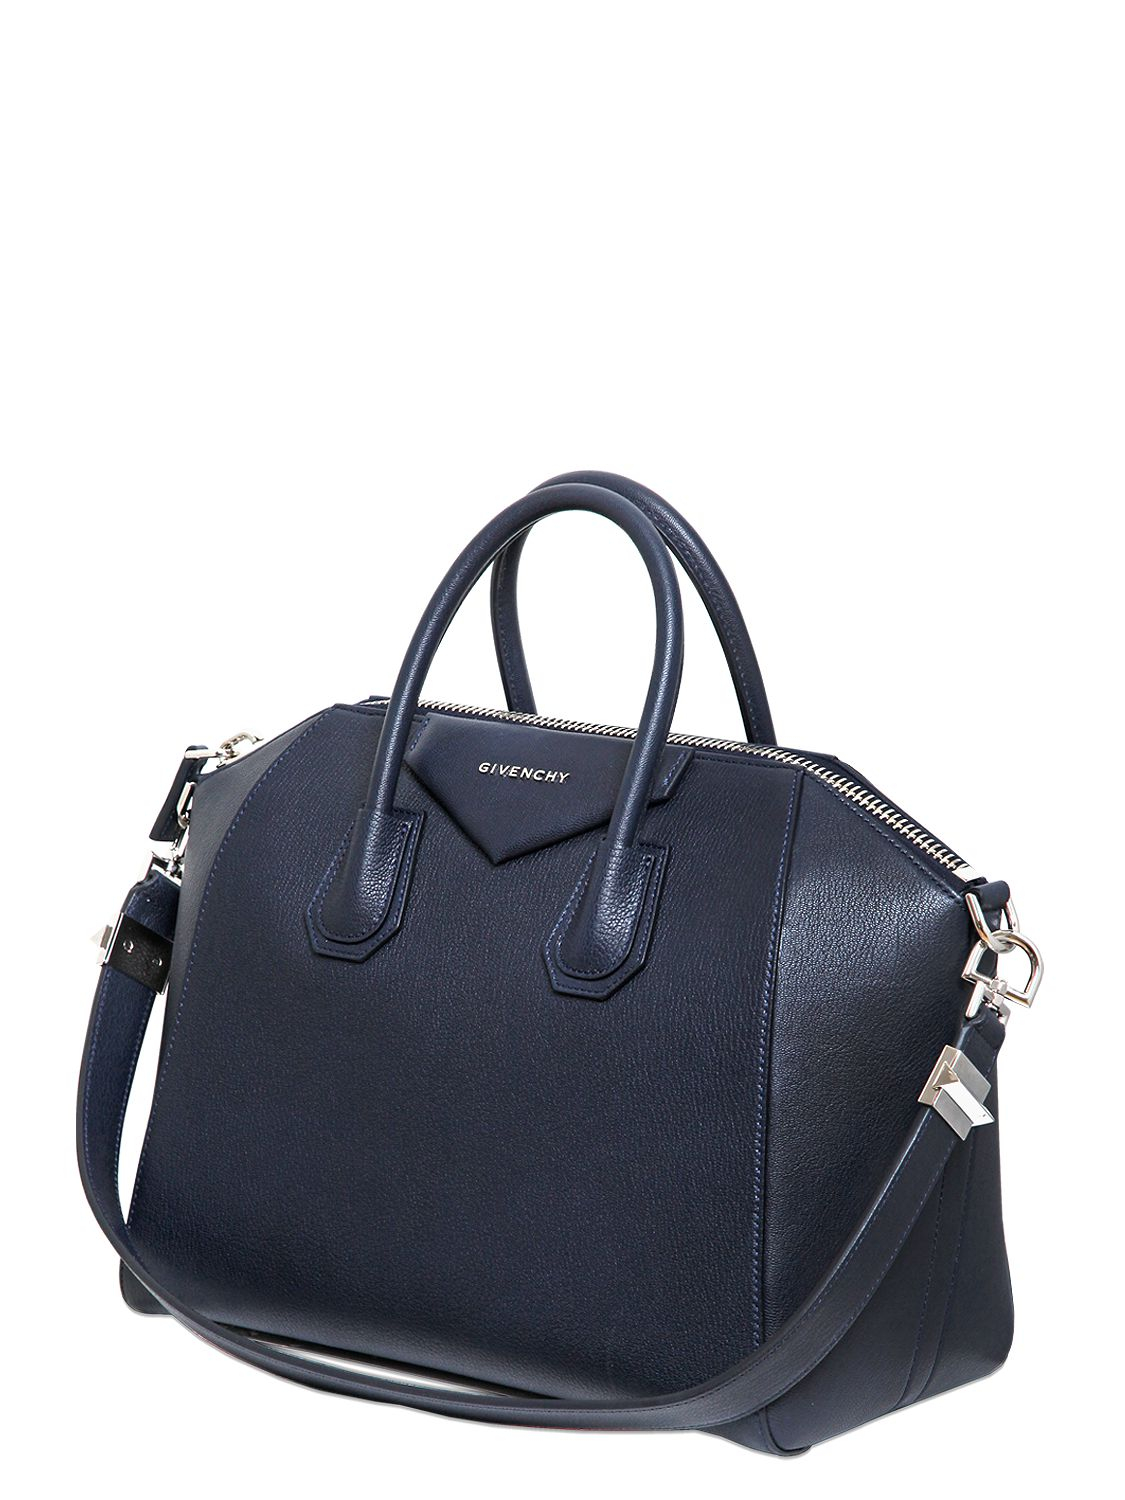 Lyst - Givenchy Medium Antigona Grained Leather Bag in Blue